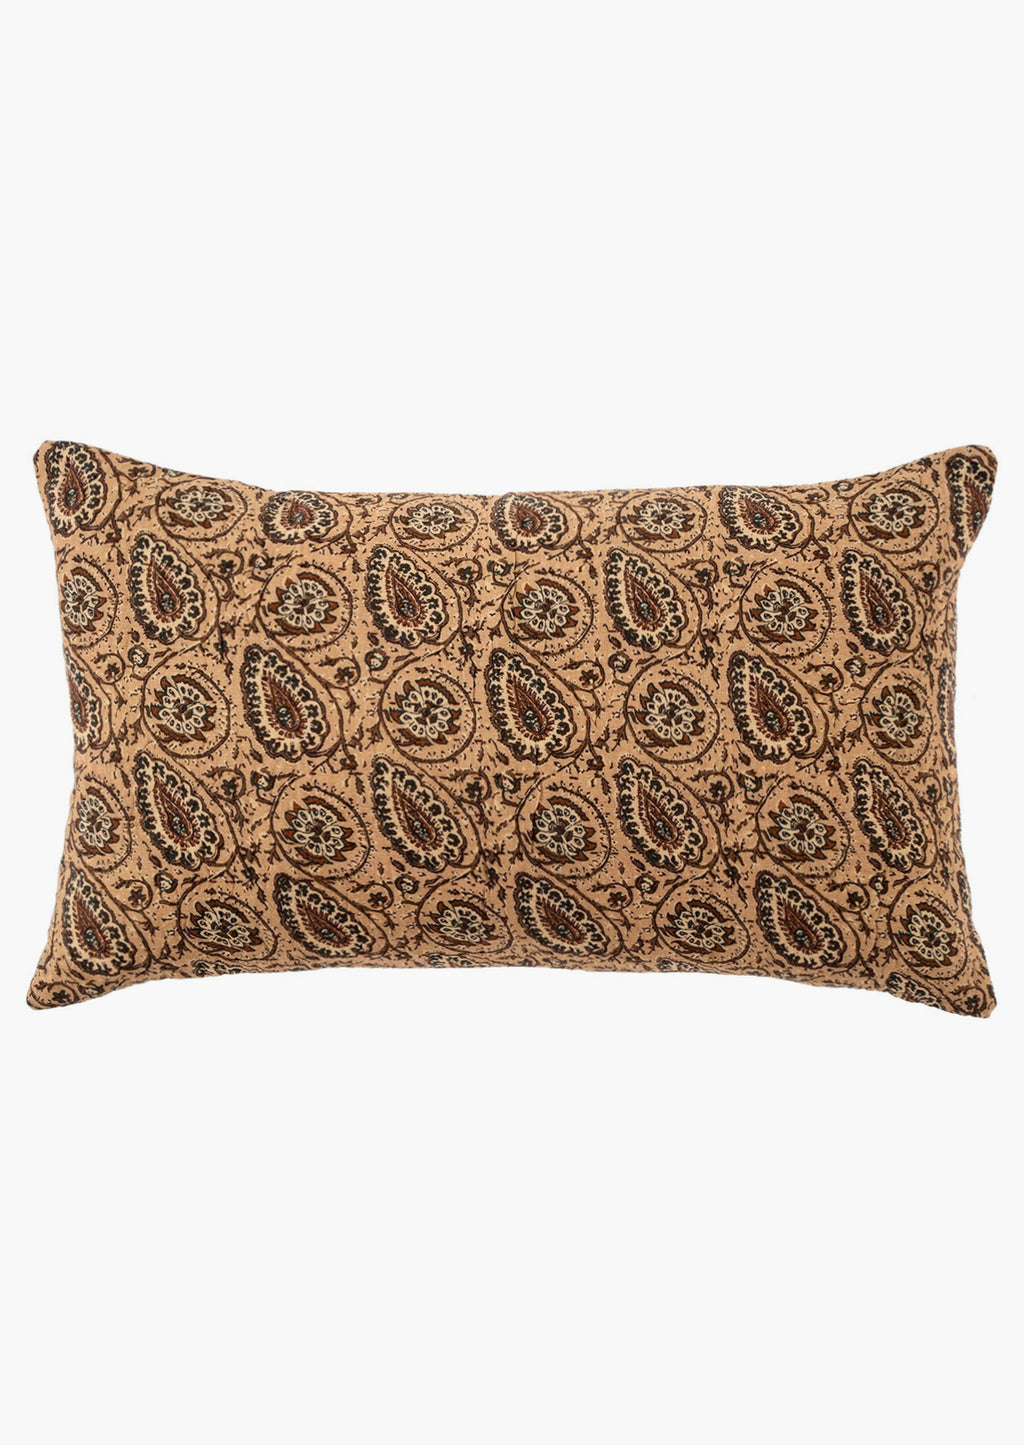 1: A lumbar throw pillow in peach paisley block print pattern.